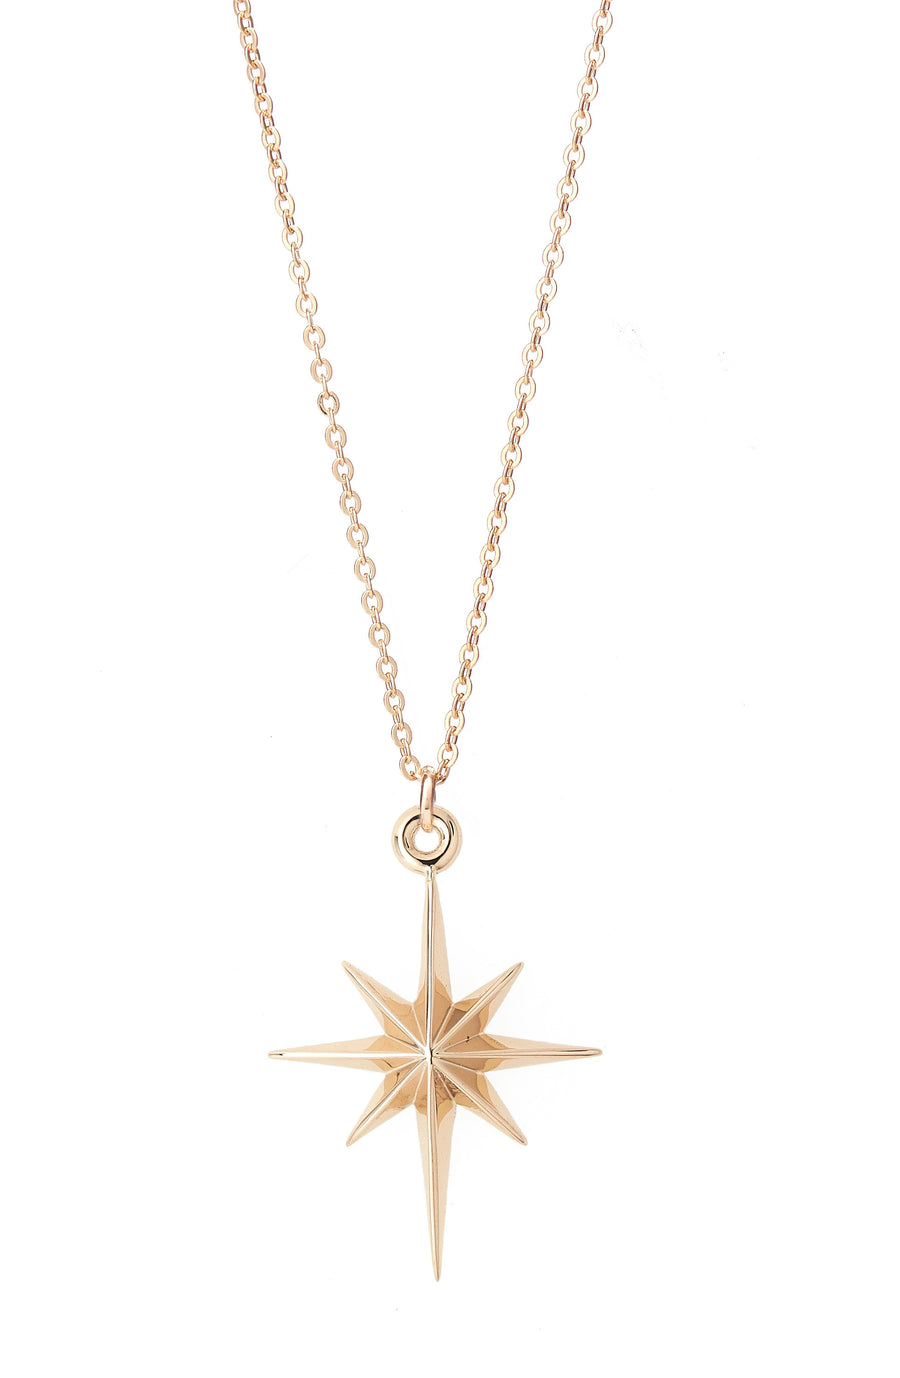 NORTHERN STAR PENDANT – Talon jewelry